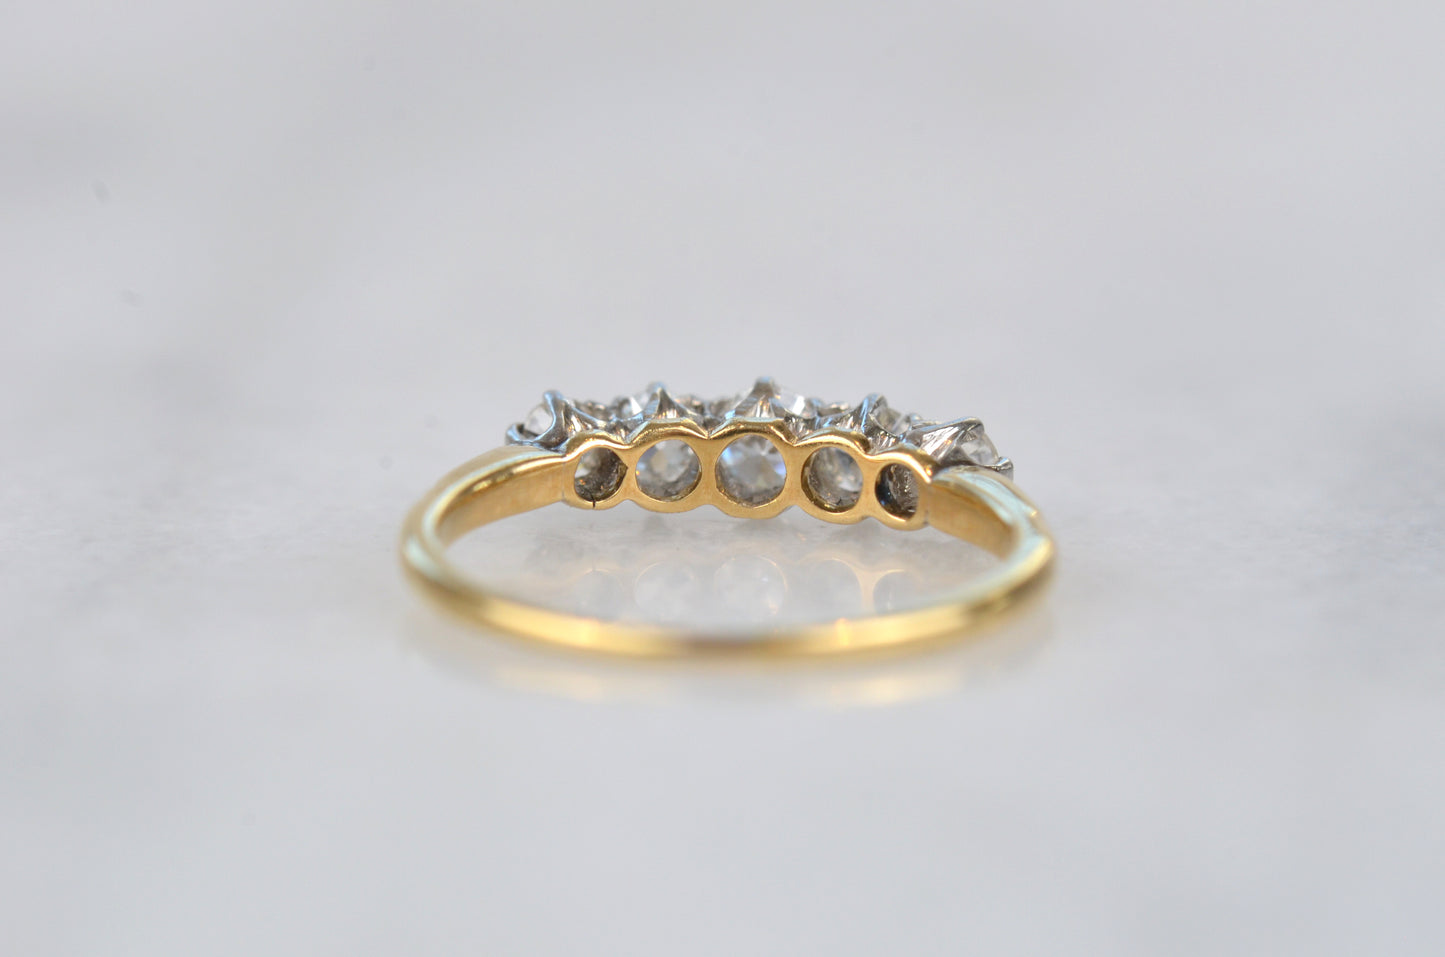 Sparkling Art Deco Five Diamond Ring